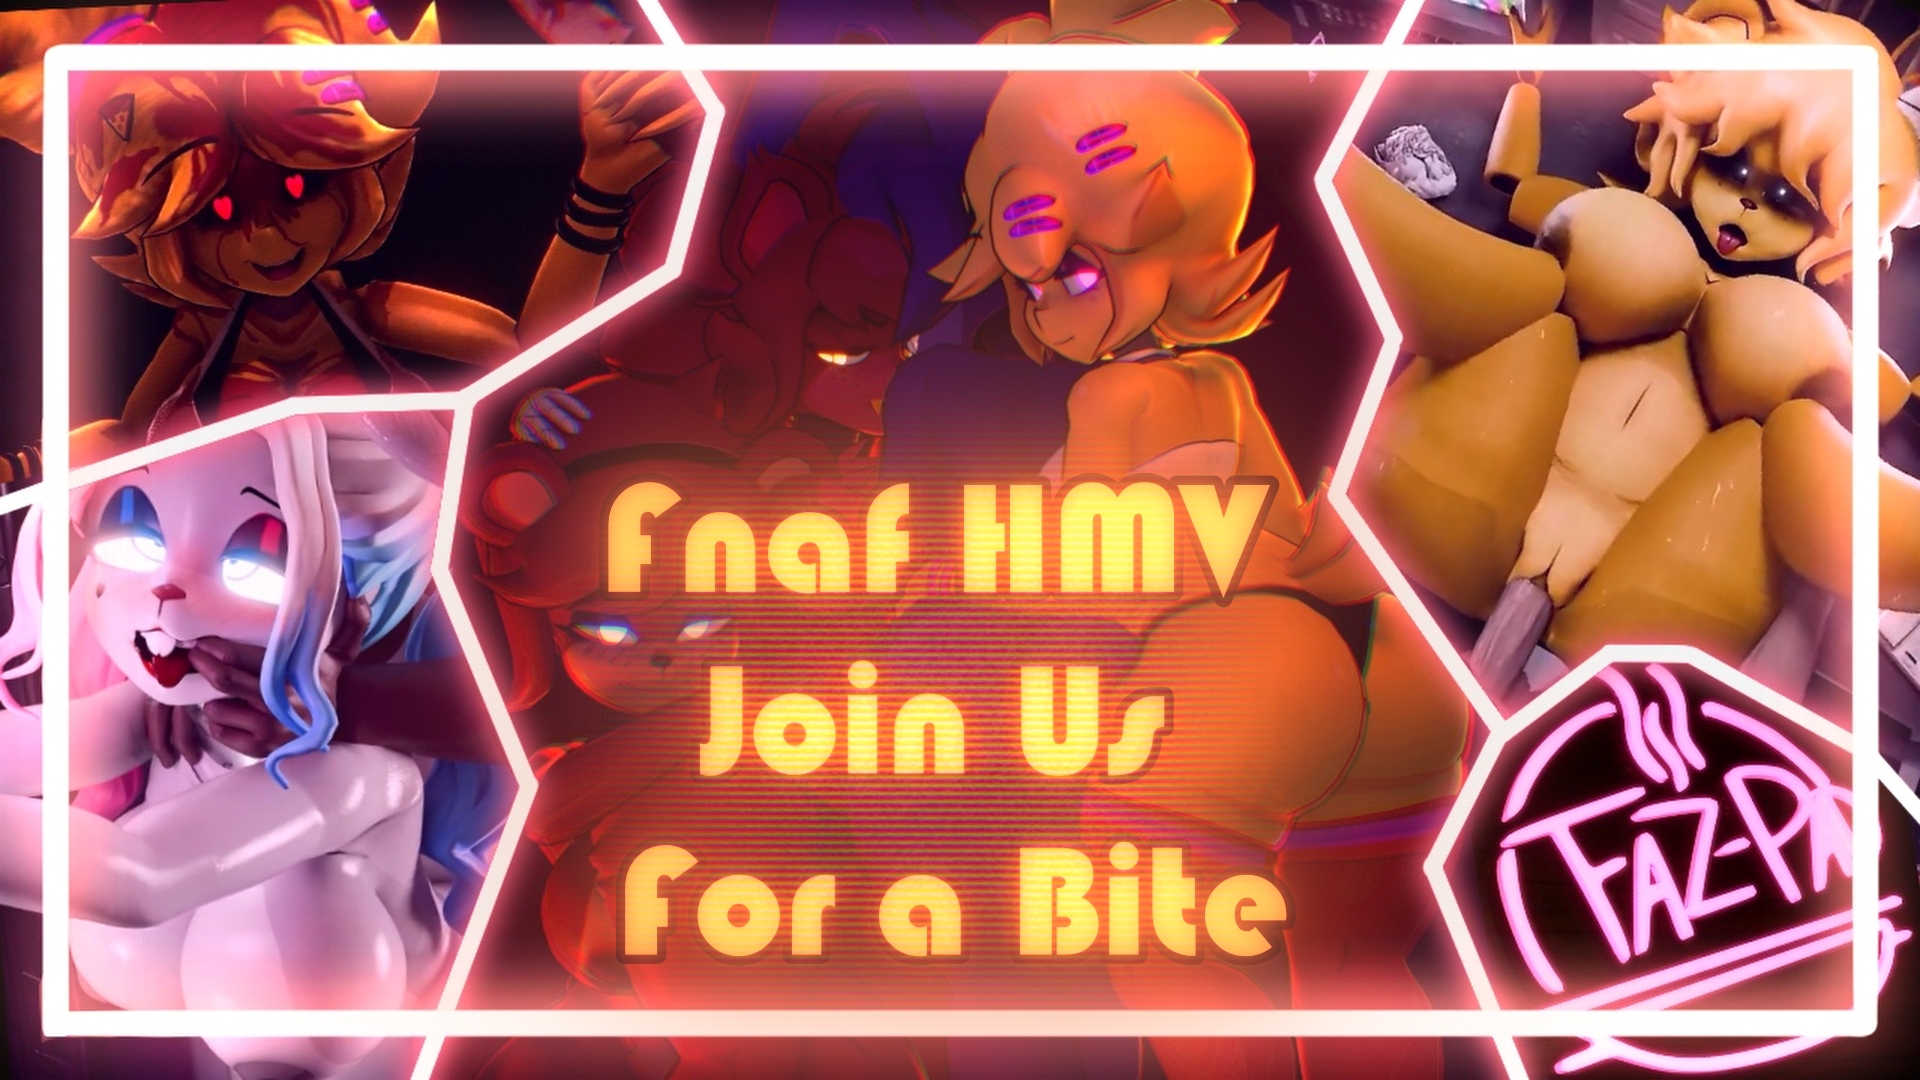 [cooli] (3D) FNAF HMV – Join Us For a Bite – It’s Been So Long